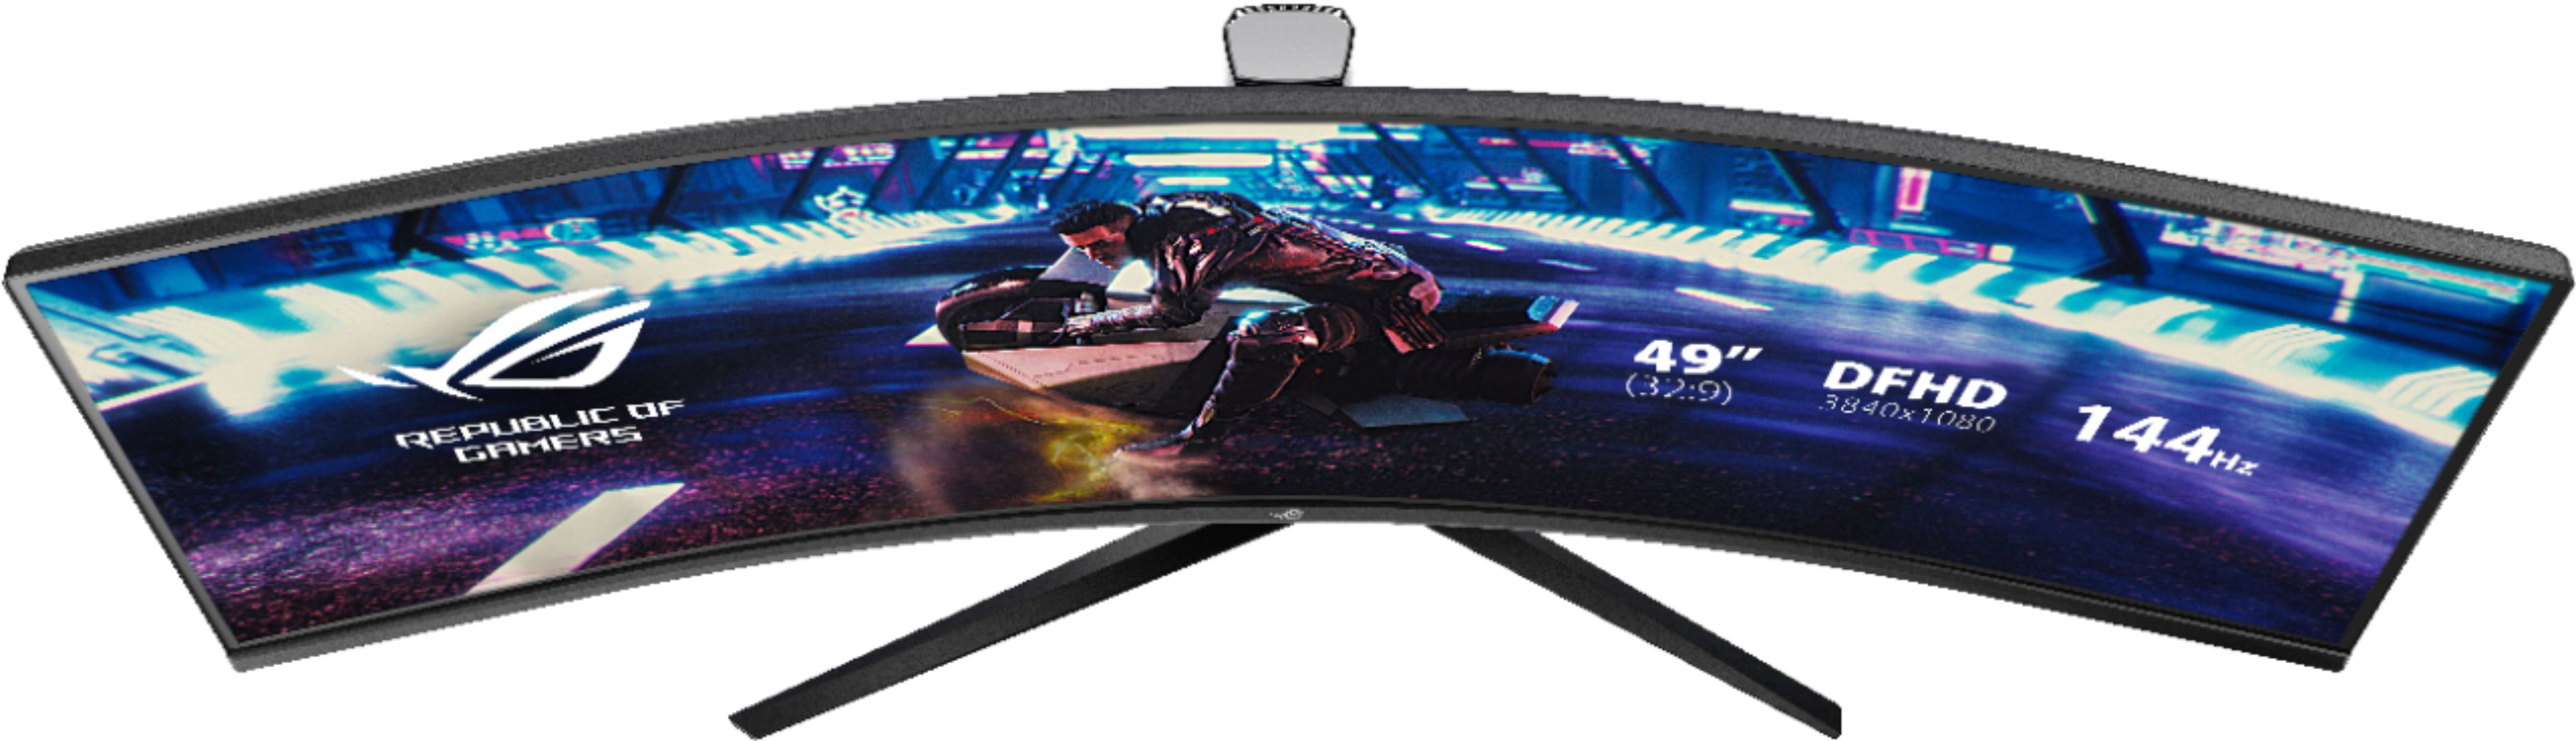 Best Buy: ASUS ROG Strix 49” Curved FHD 144Hz FreeSync Gaming Monitor with  HDR (DisplayPort,HDMI,USB) Black XG49VQ